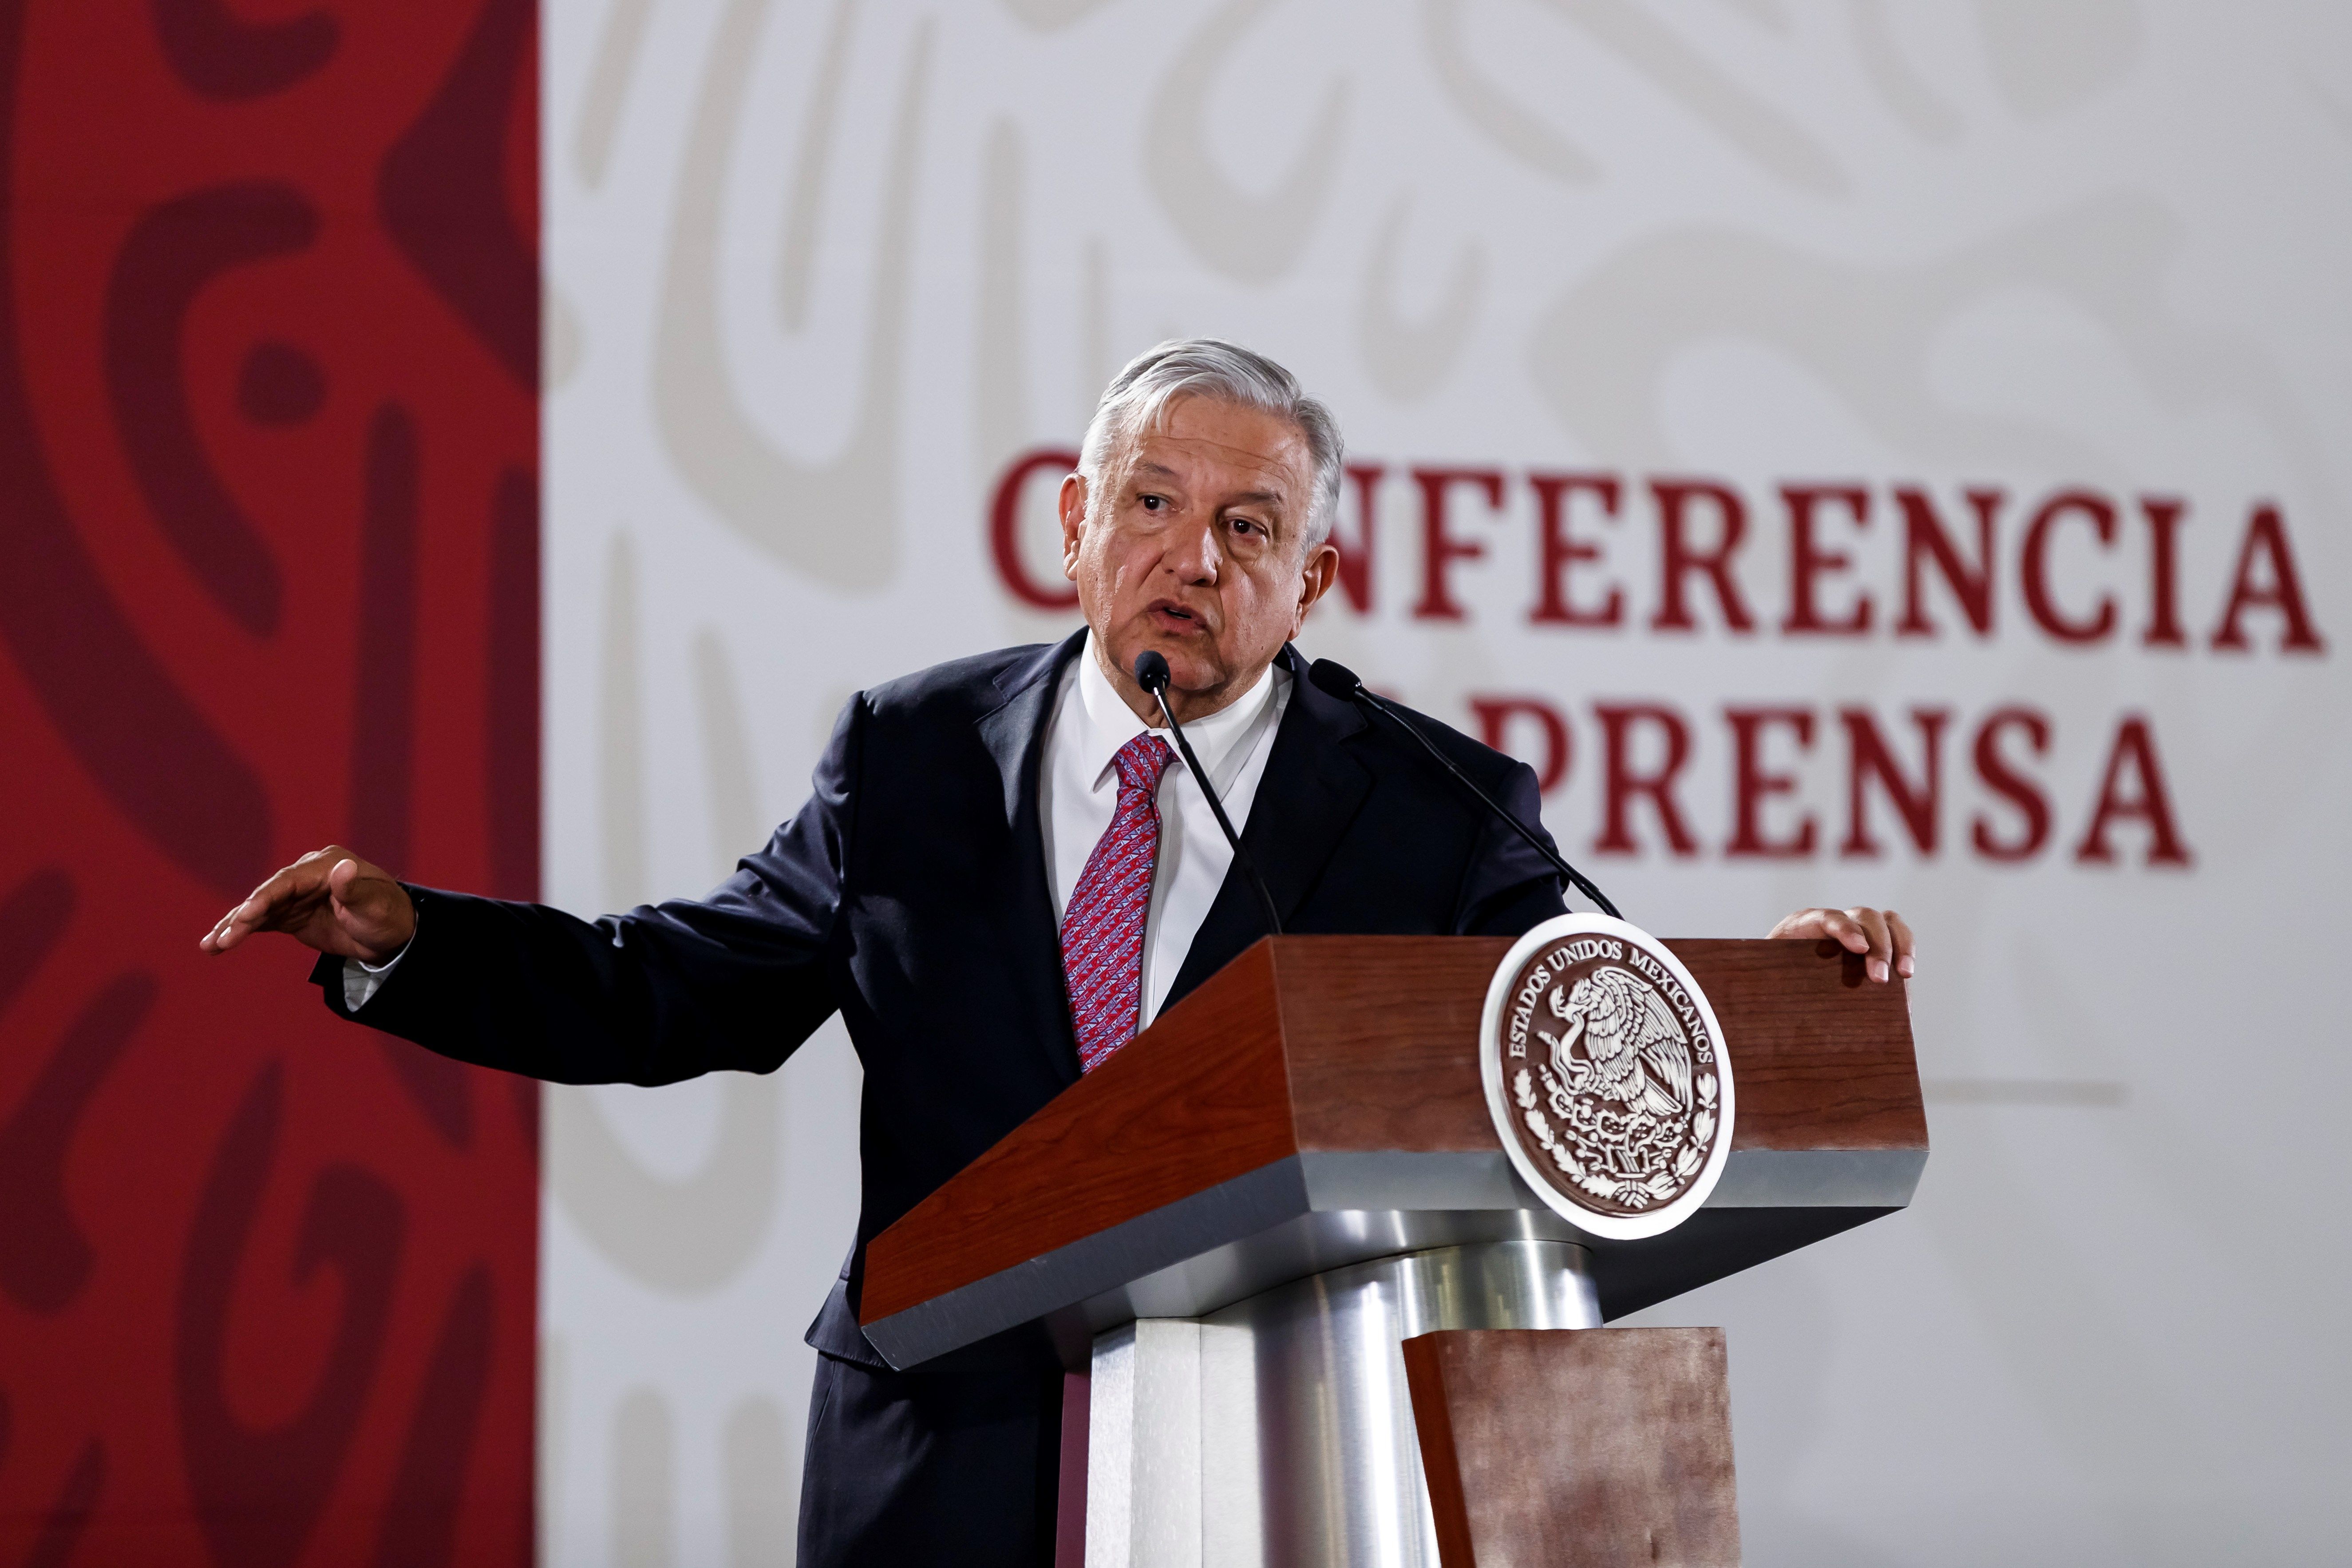  Asegura López Obrador que si pudo con el huahicol “va a poder con todo”